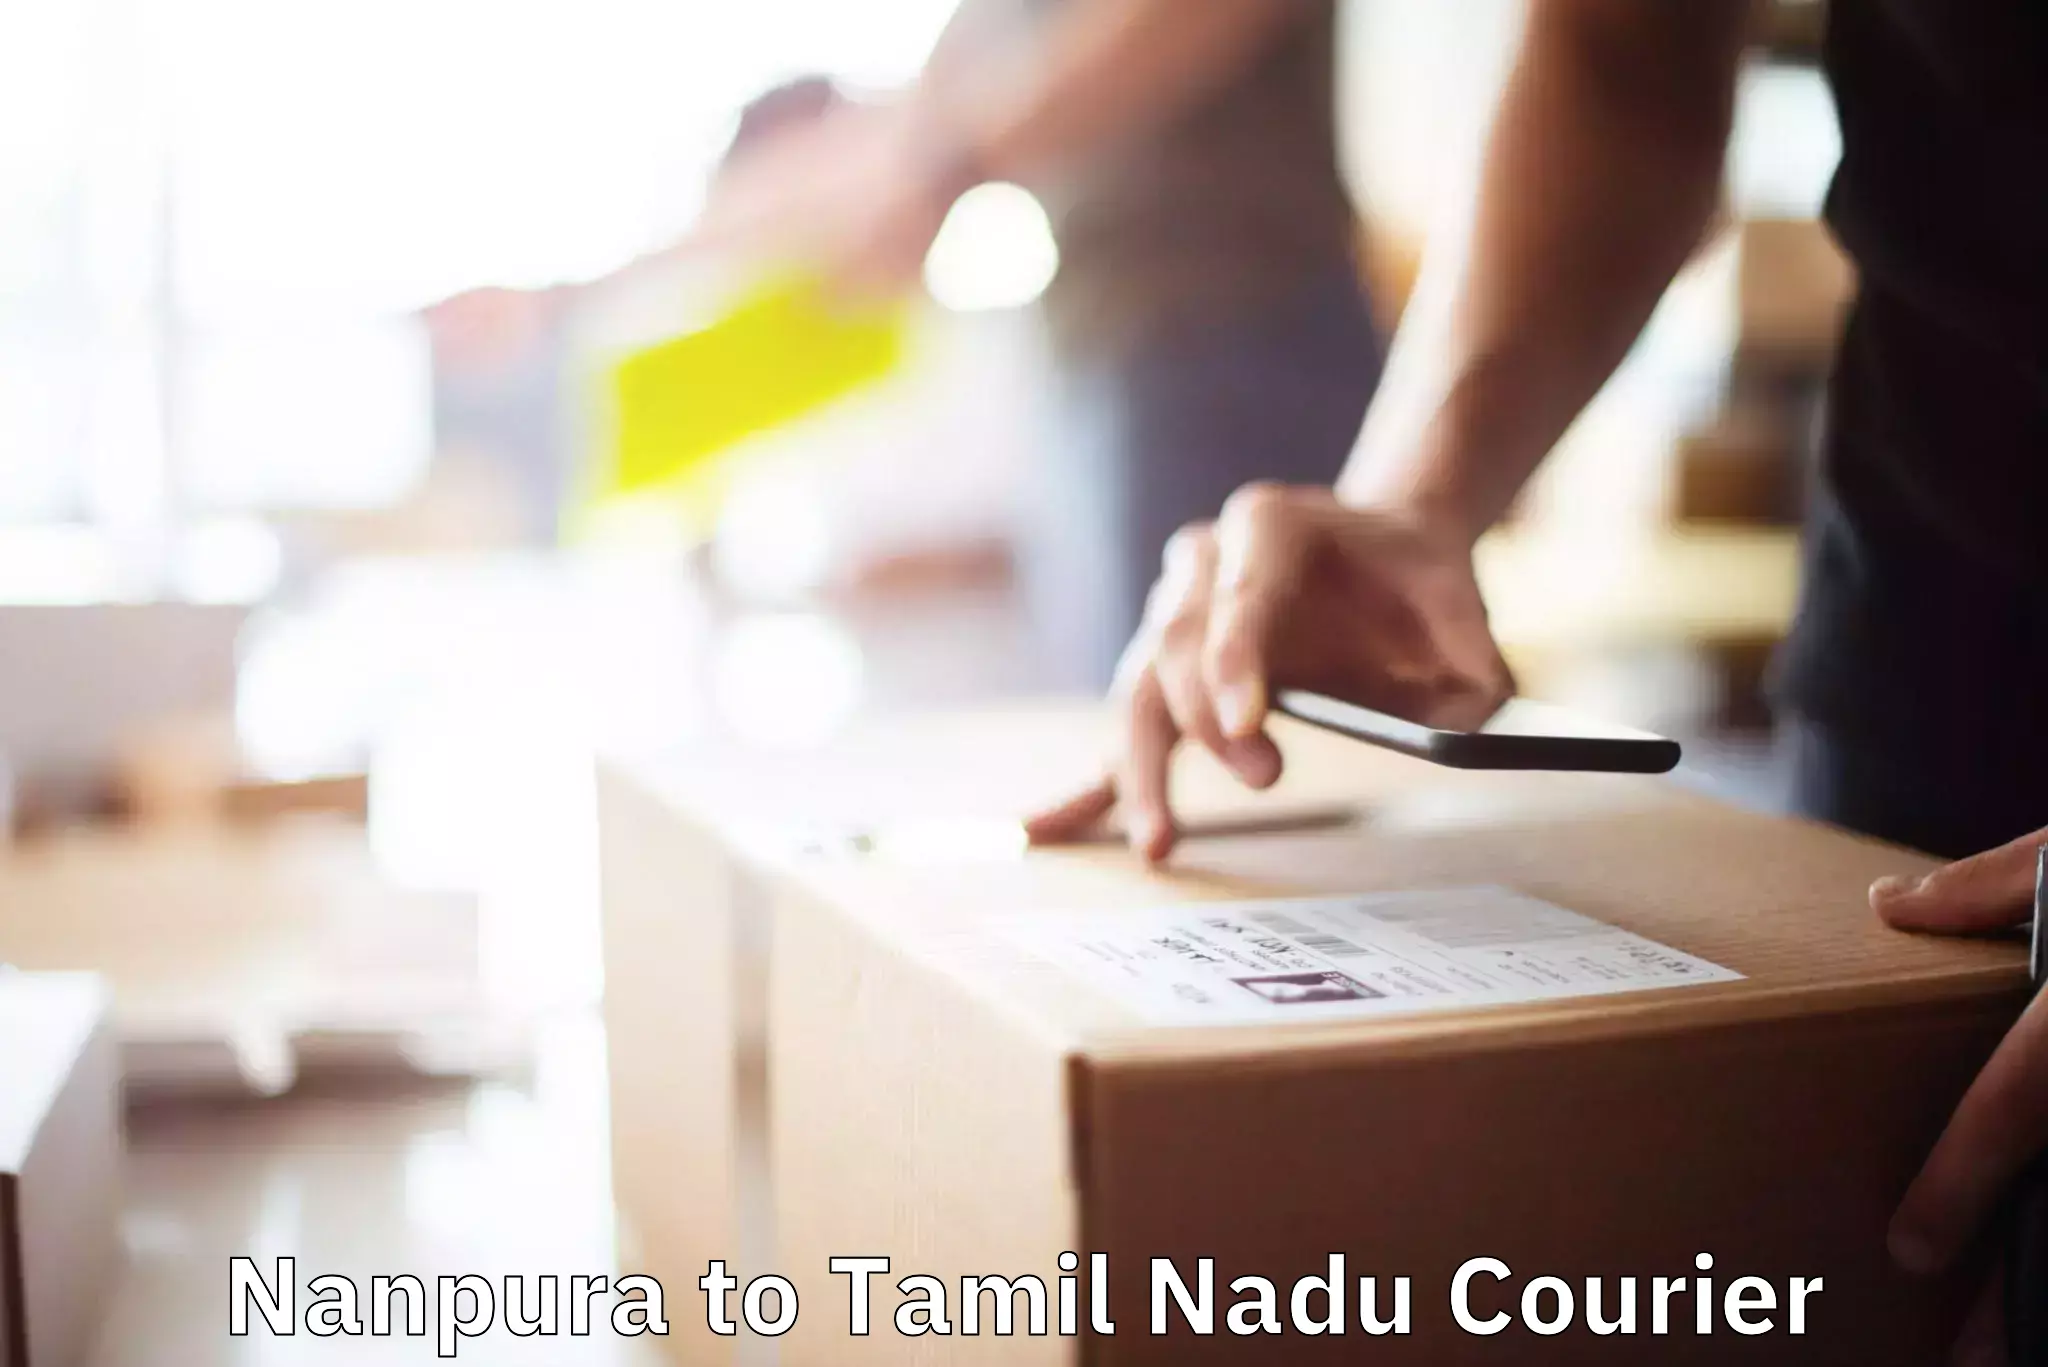 Affordable relocation solutions Nanpura to Perambur